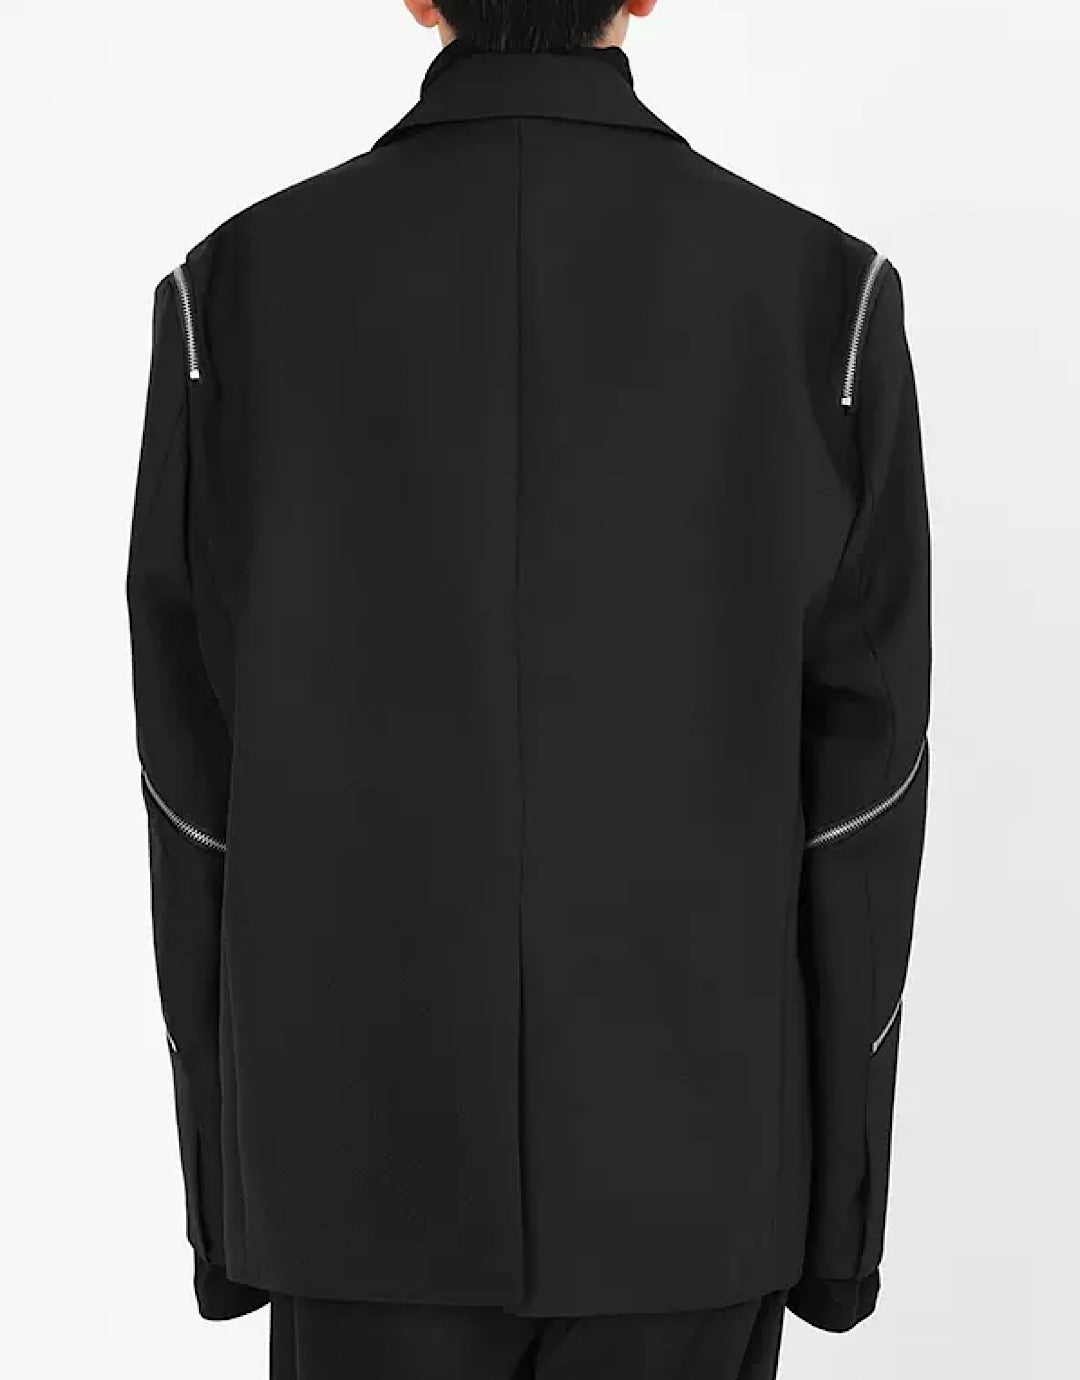 【BOB】Overall Zipper Modewide Jacket BO0001